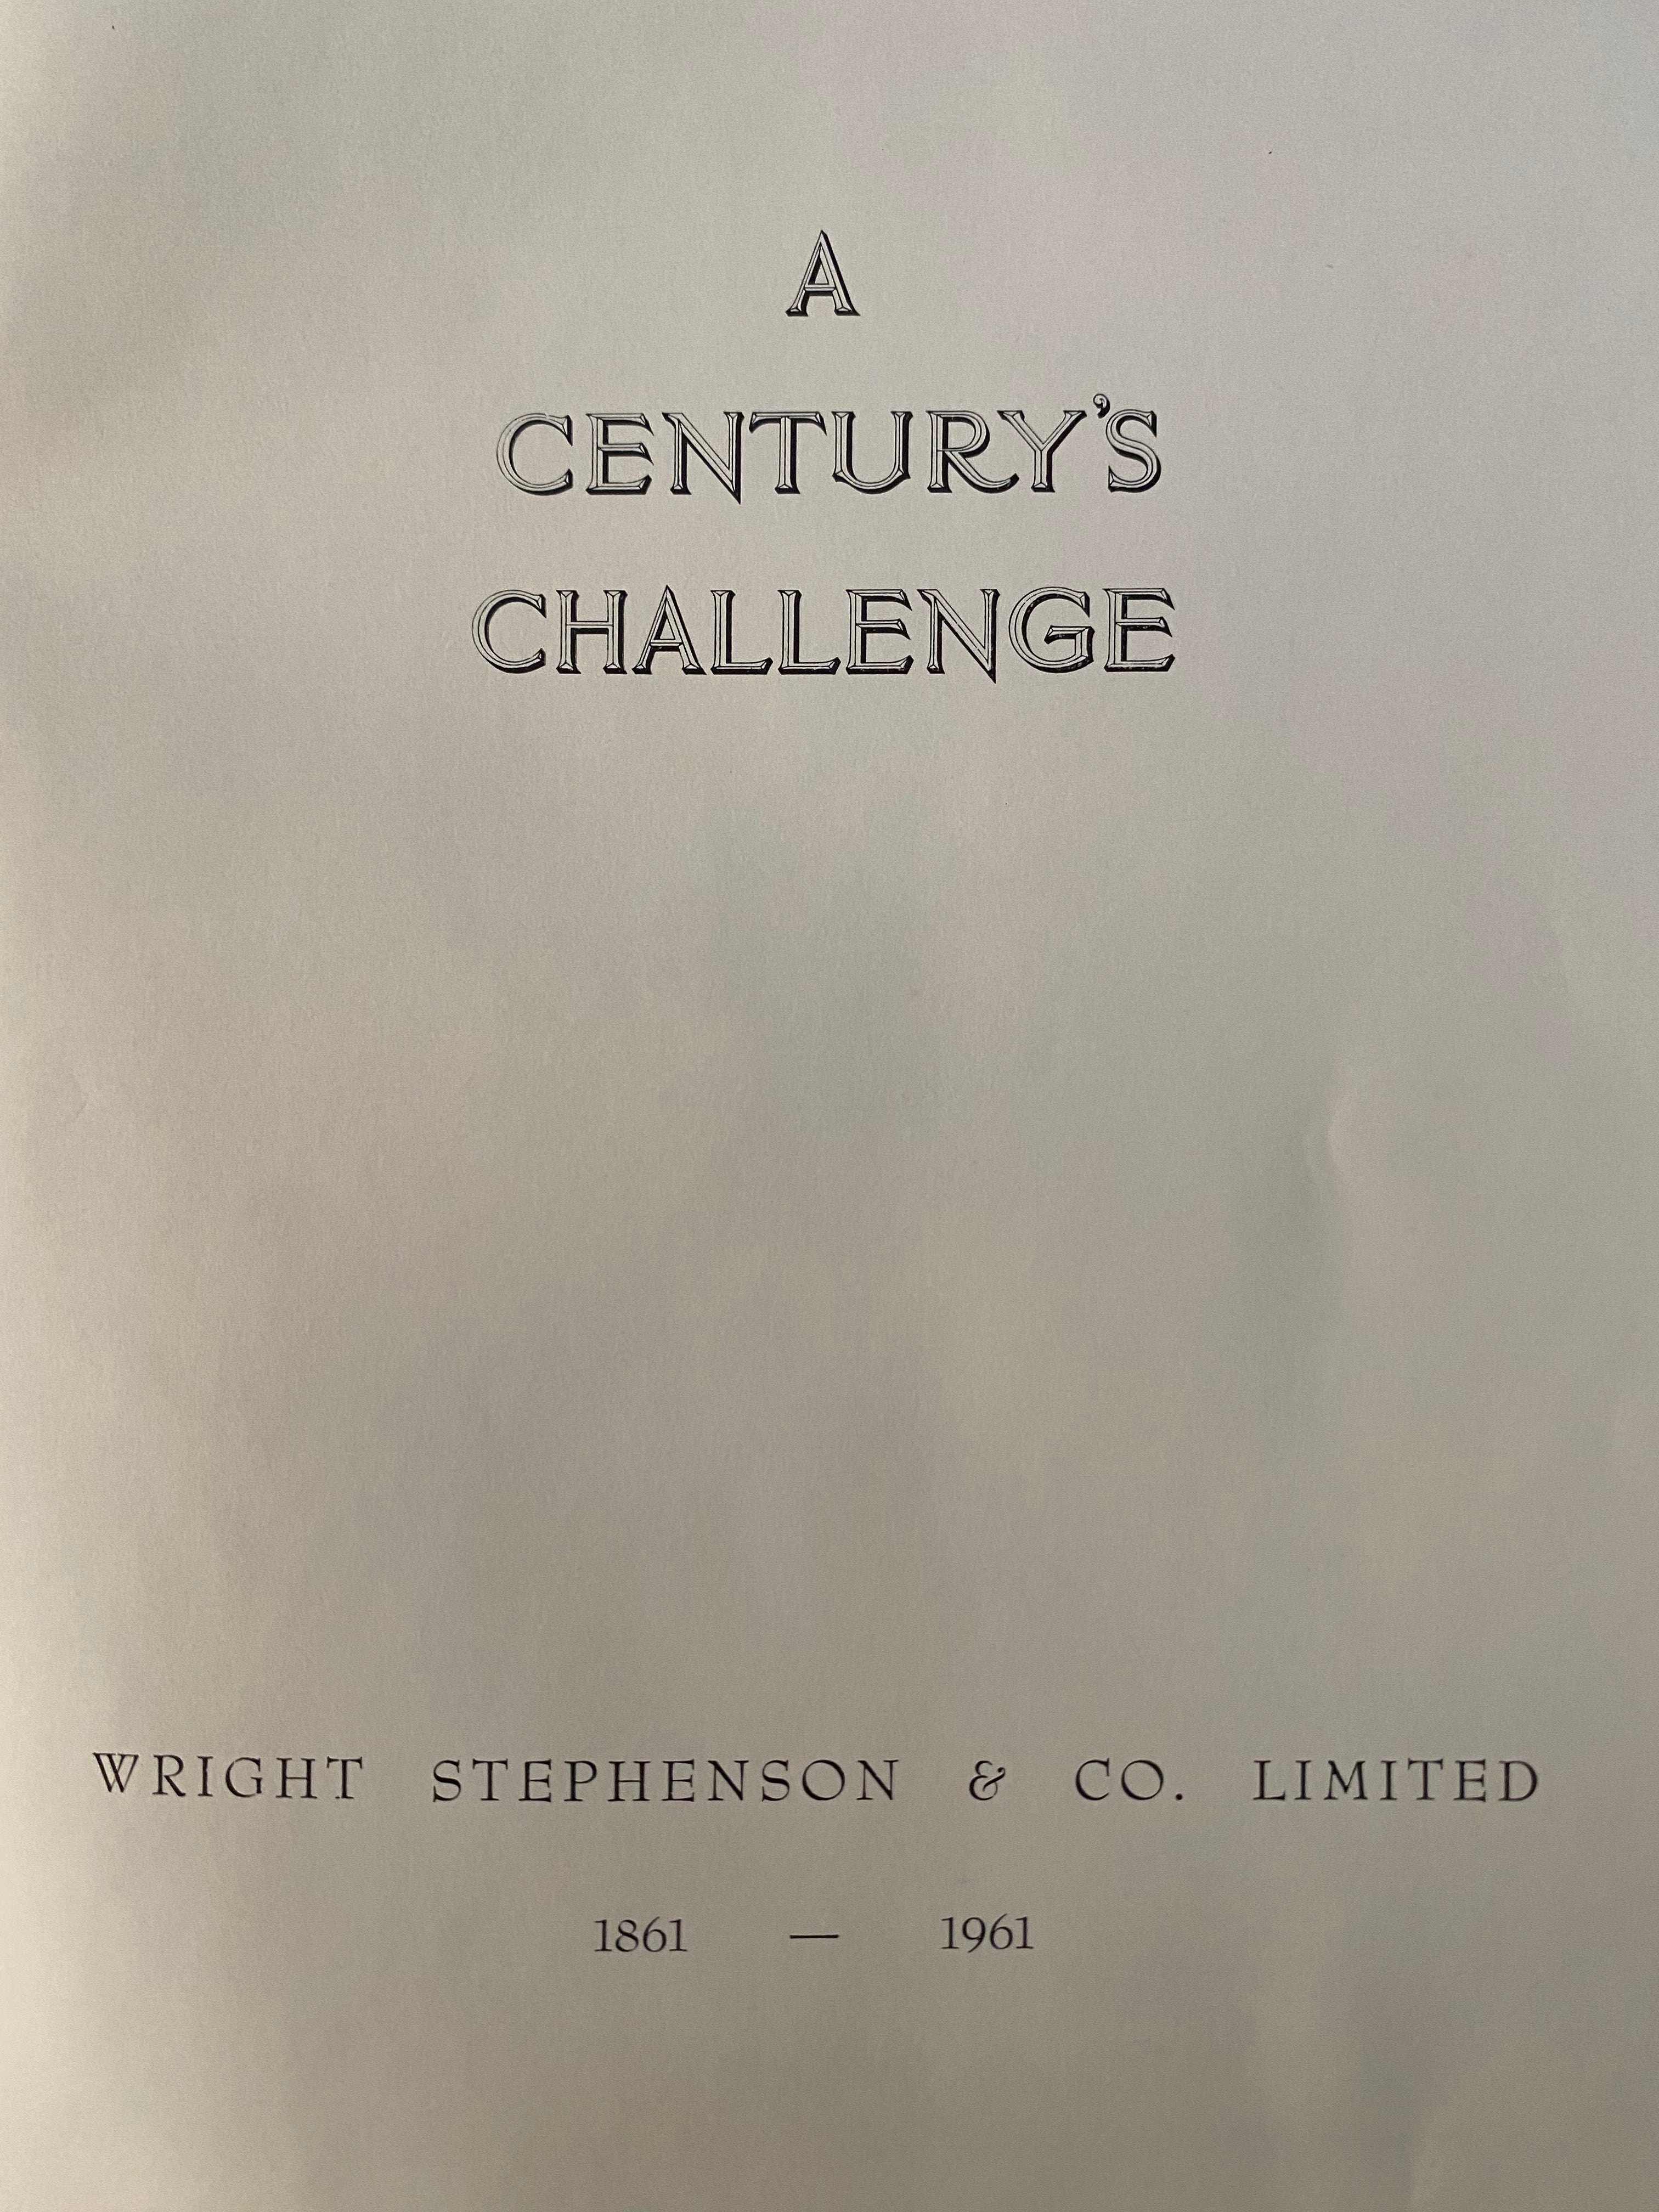 A Century's Challenge